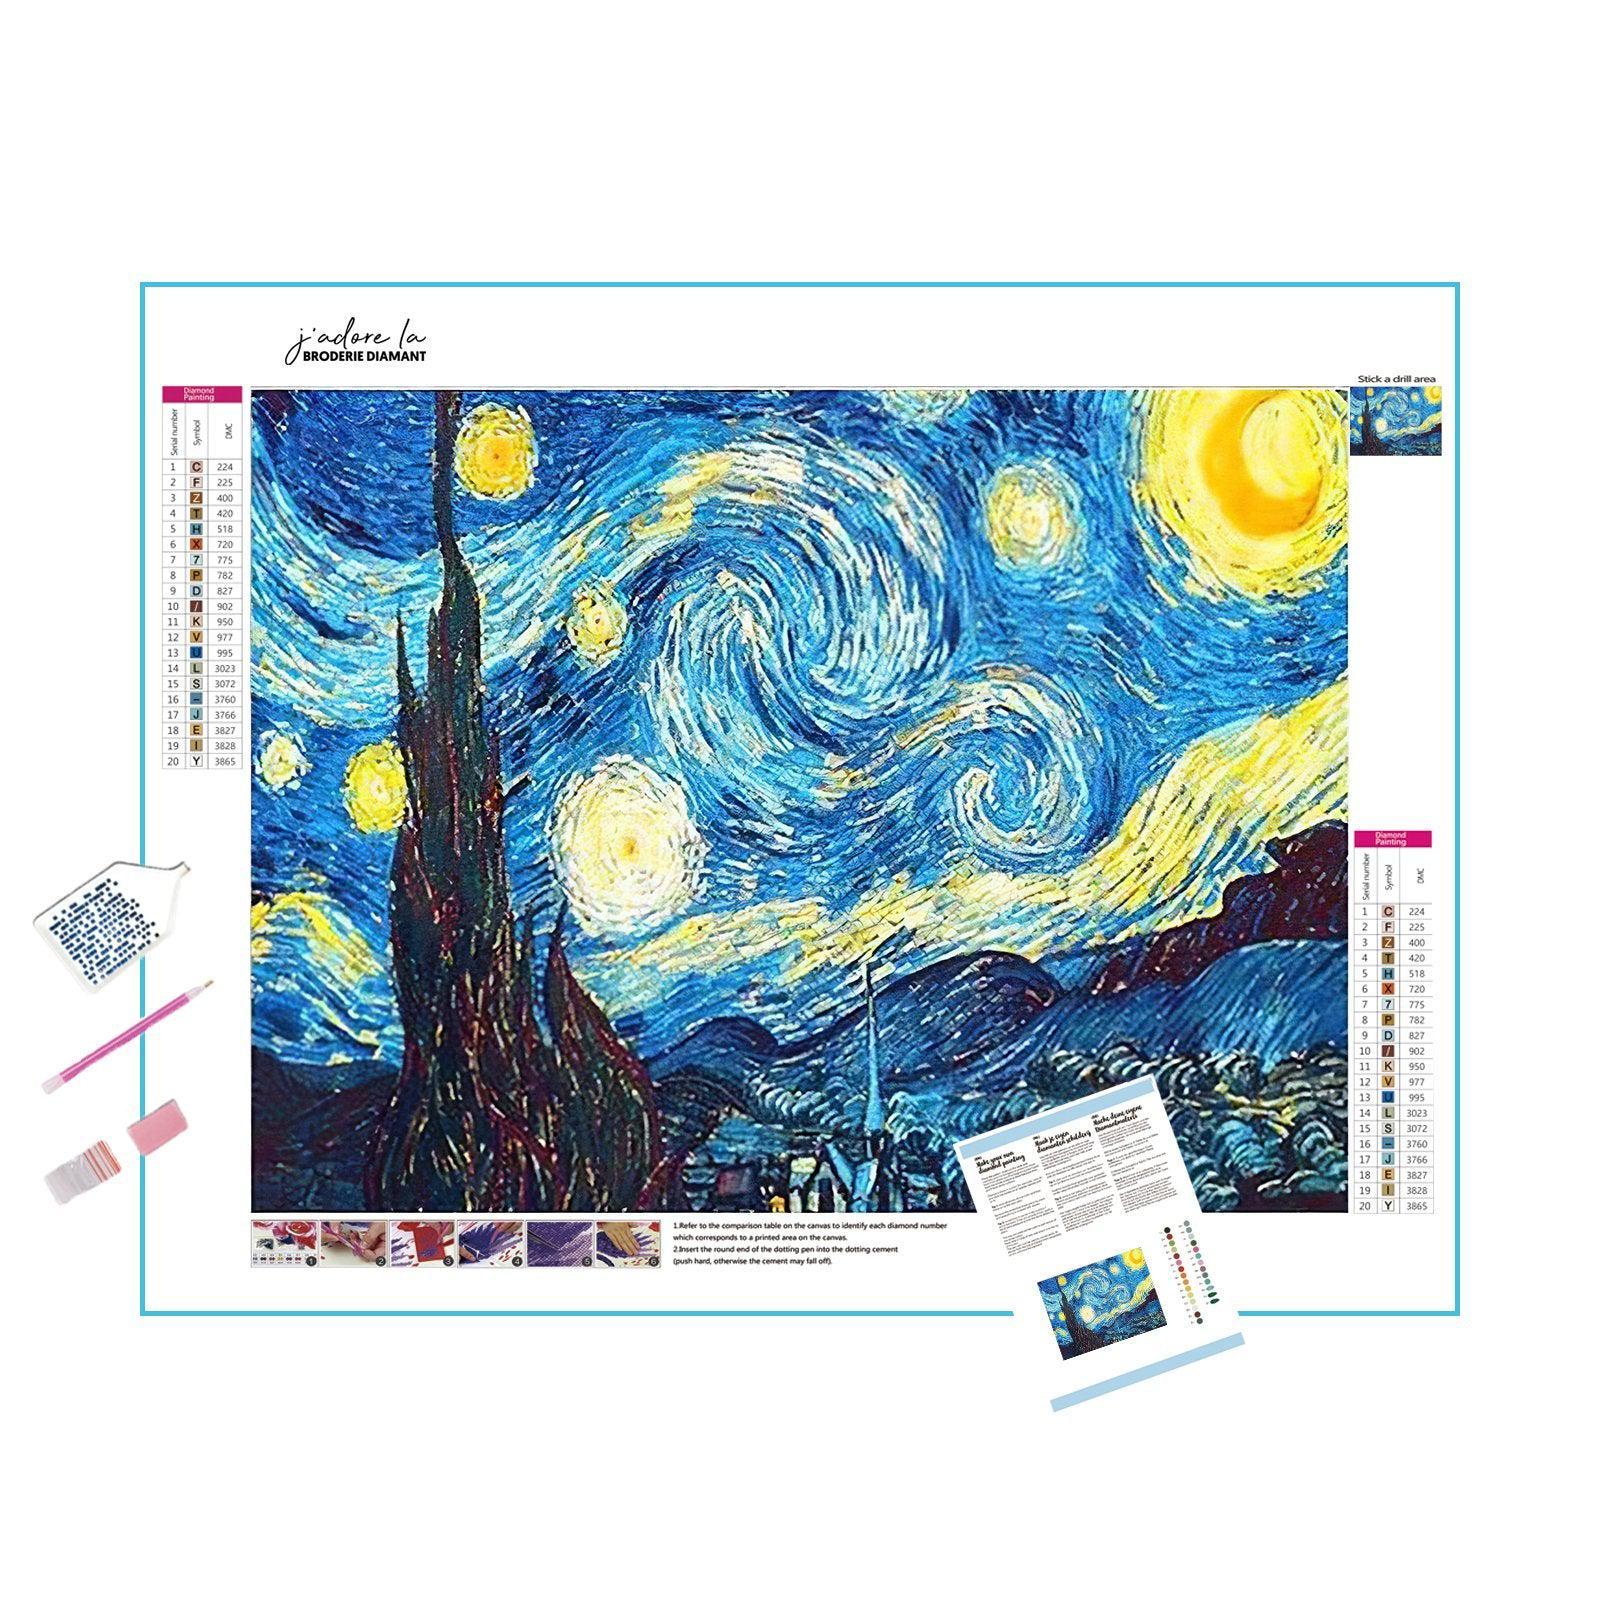 The Starry Night Van Gogh